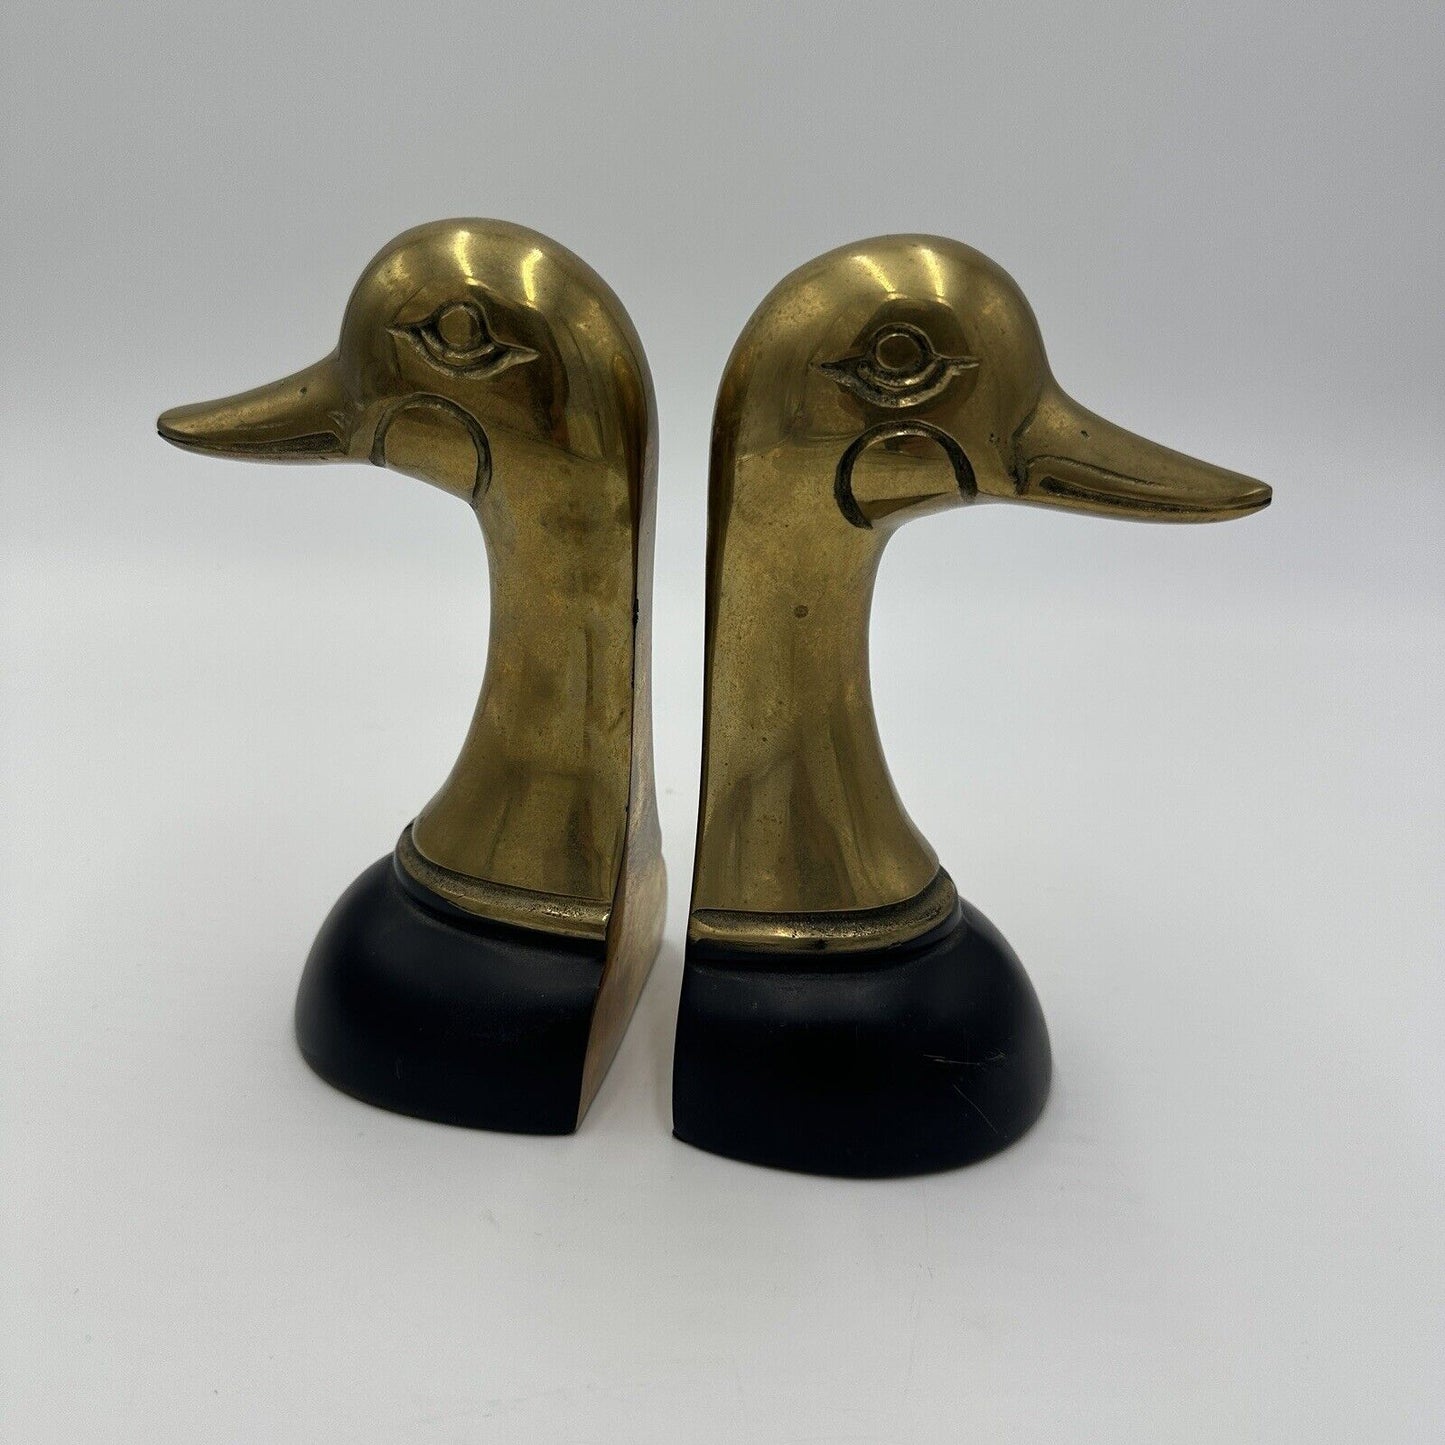 Vintage Philadelphia Duck Figurine Bookends Solid Brass 6" Set 1960 Office Decor